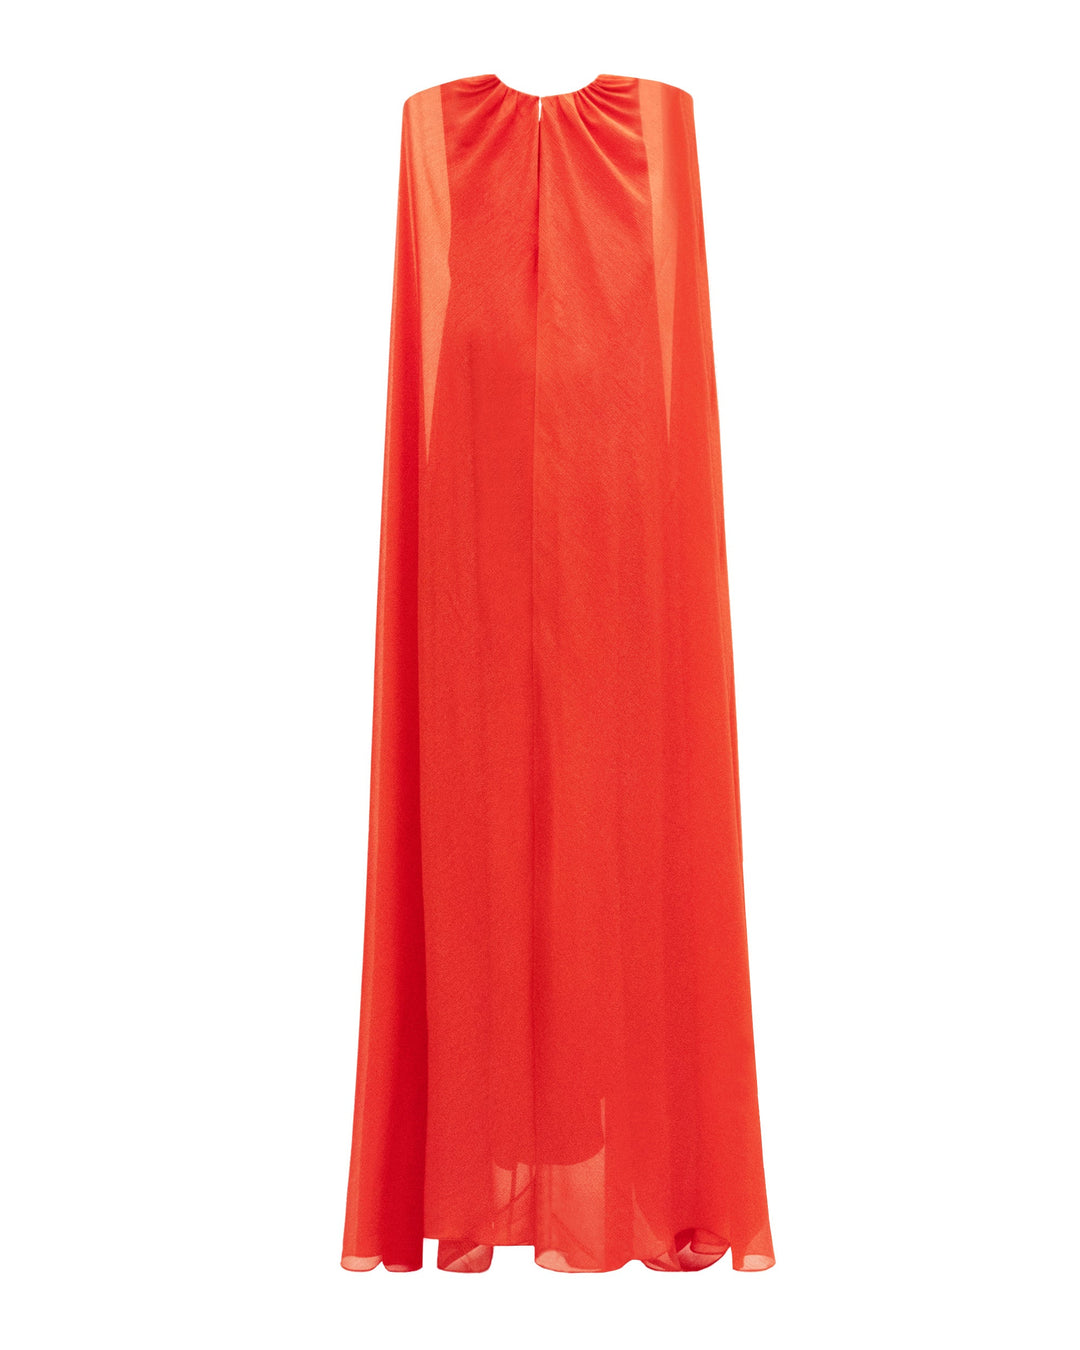 Cape-Like Sleeves Coral Dress - FOSTANI